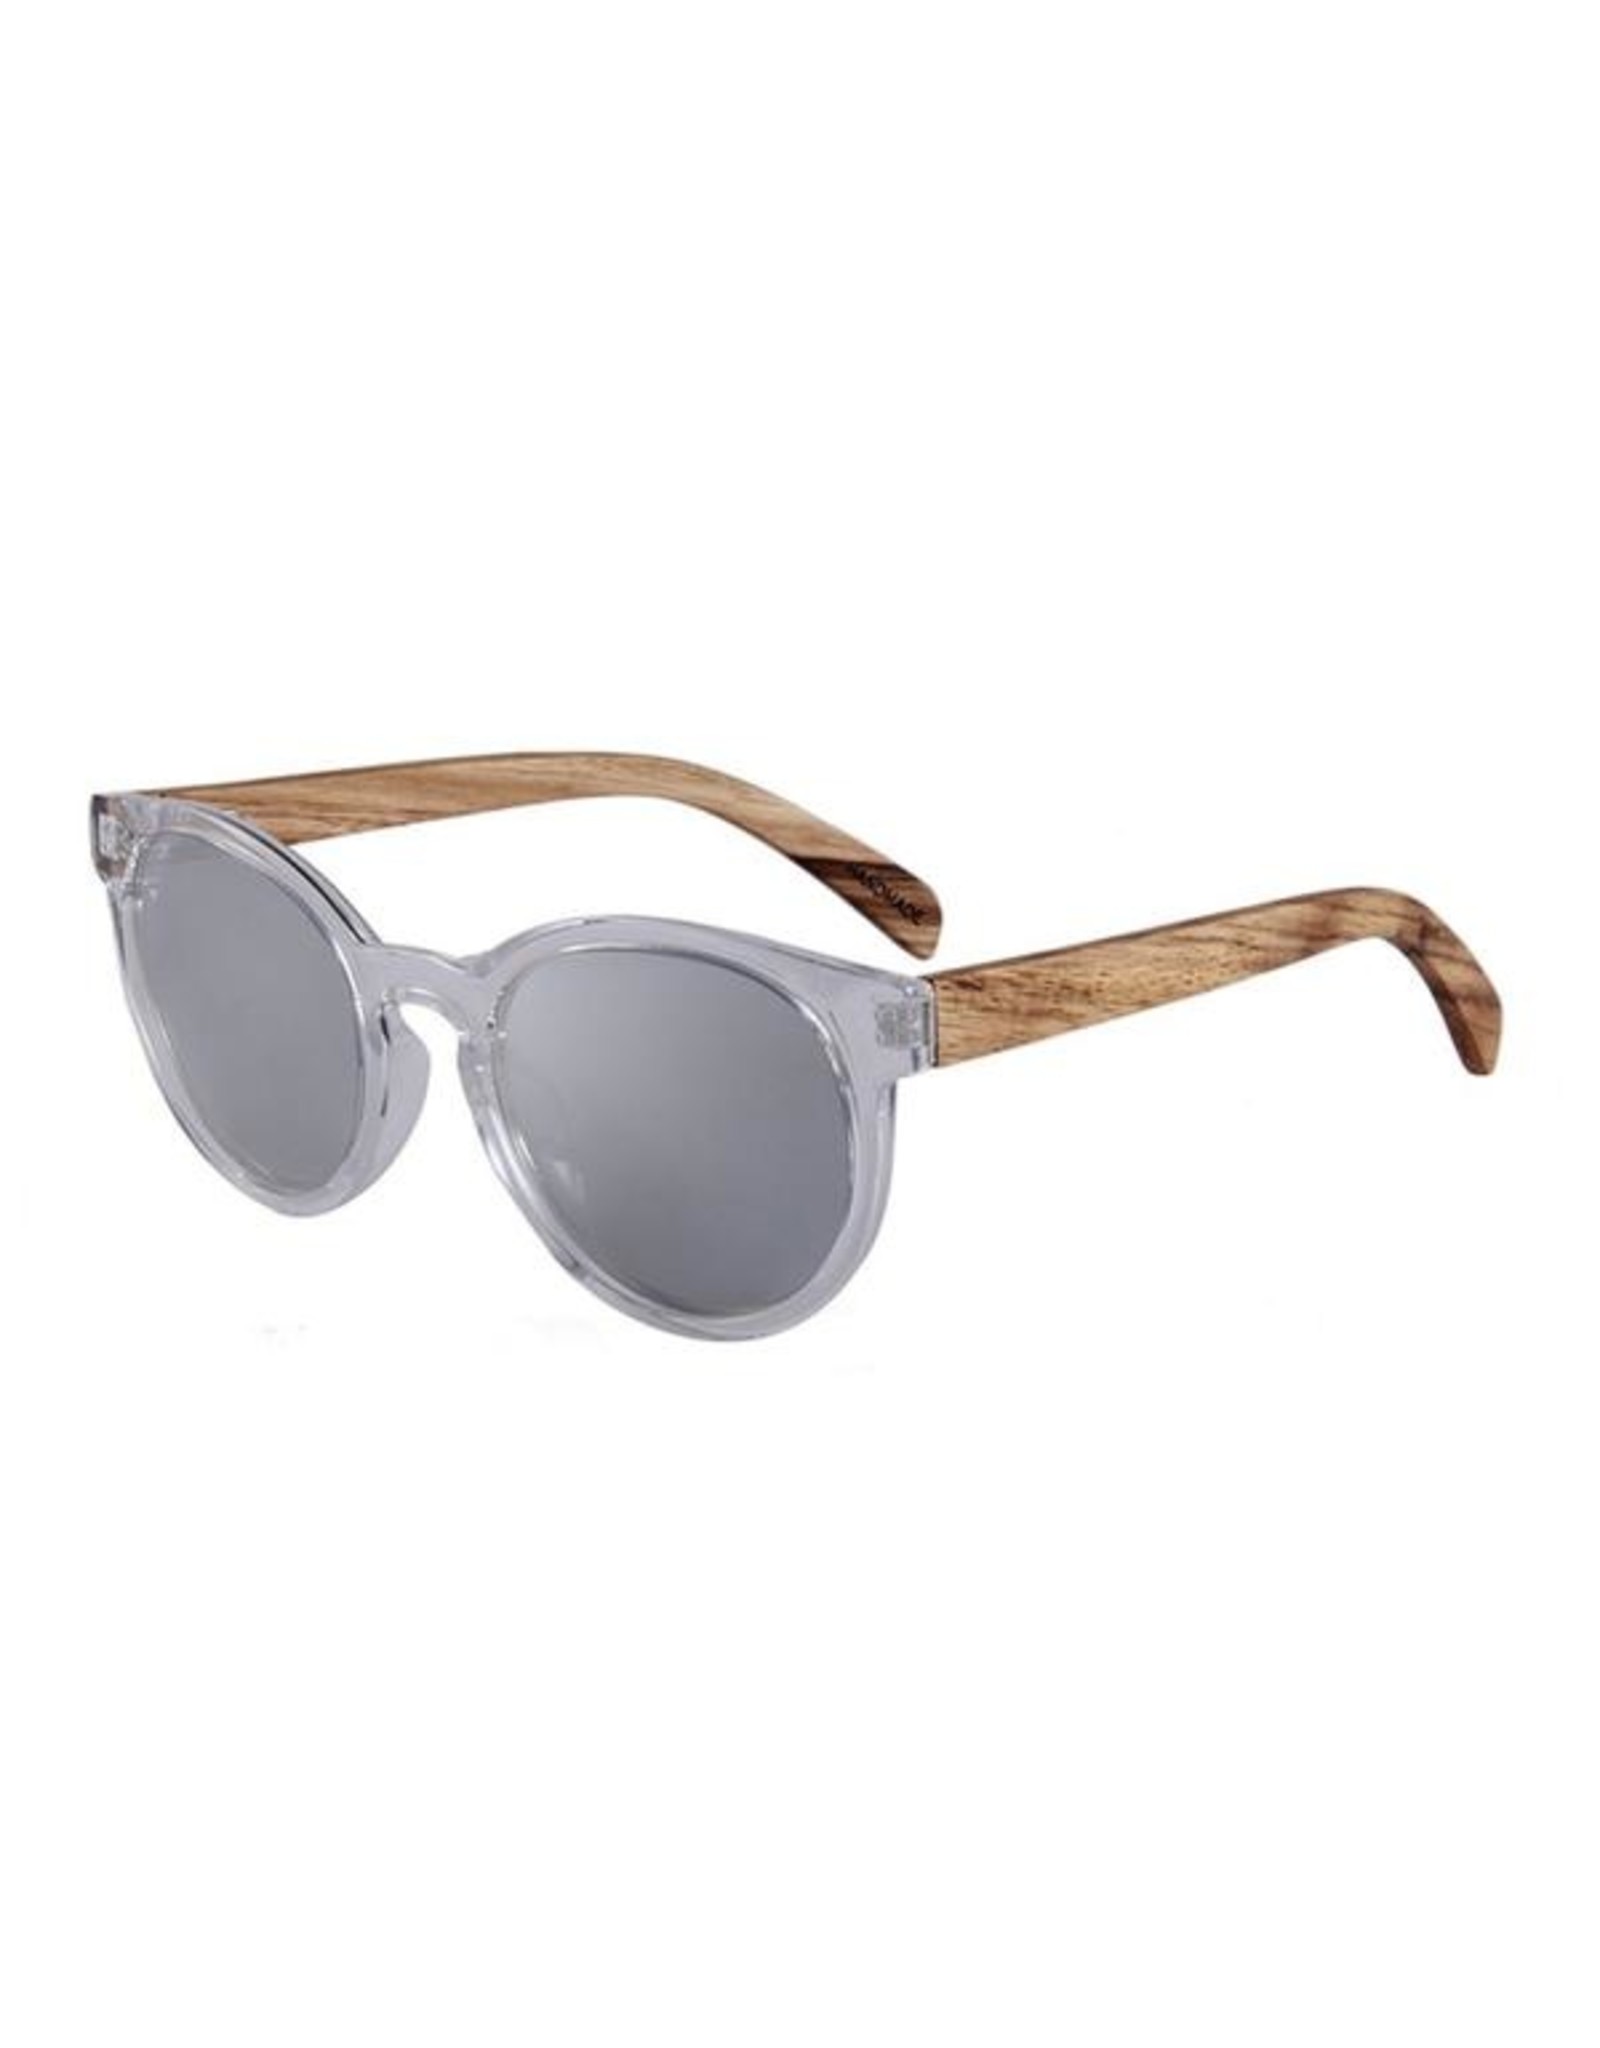 Kuma Eyewear - Costa Rica Sunglasses - Polarized